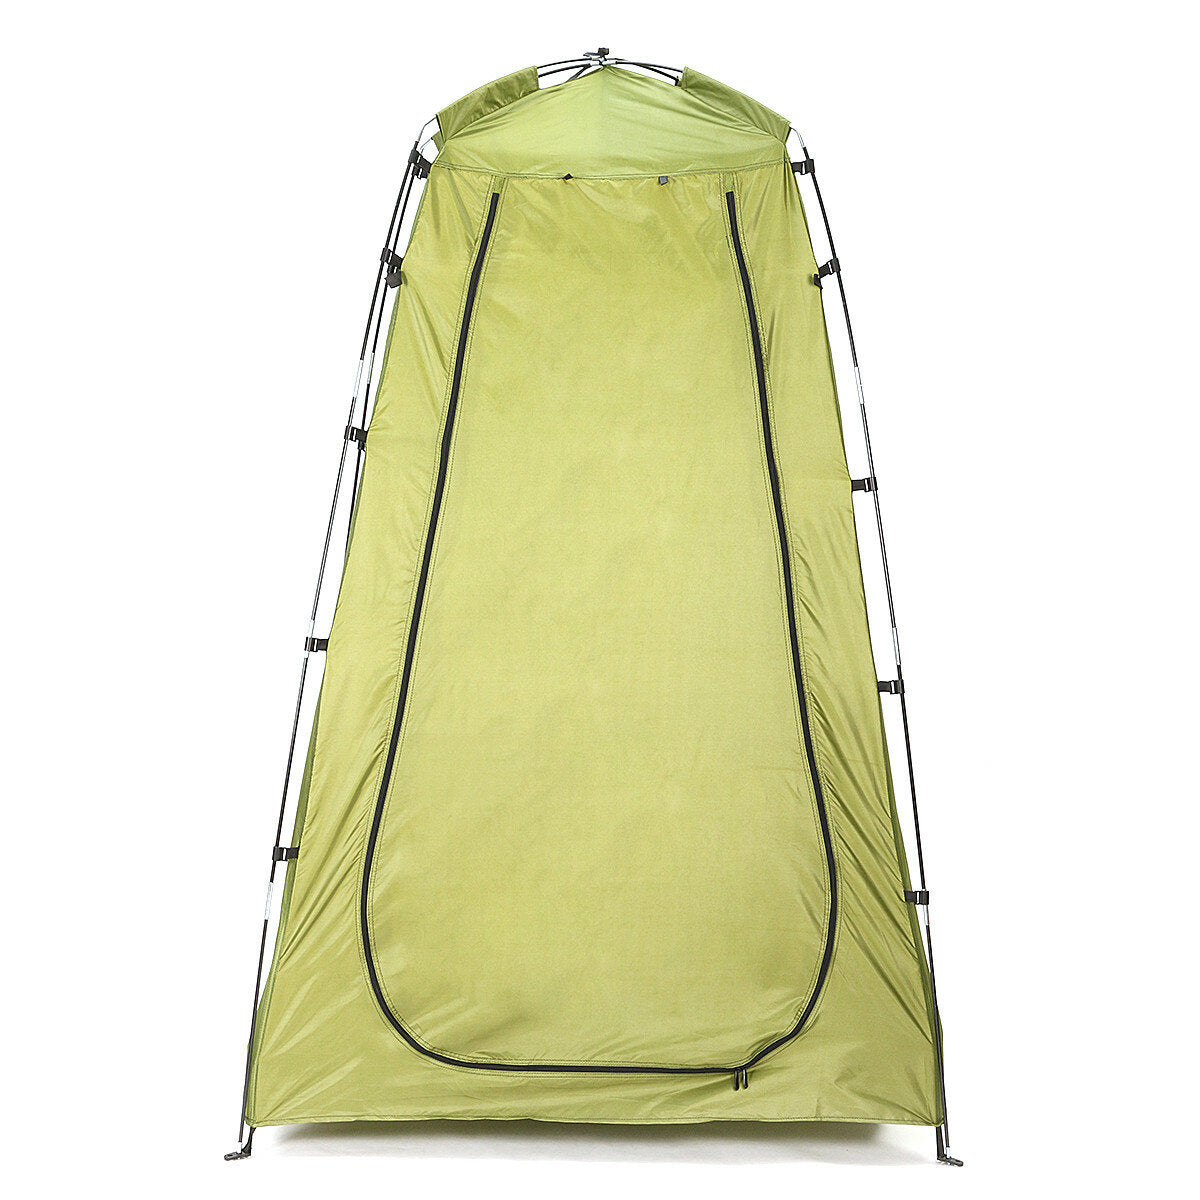 Single People Tent Outdoor Shower Toilet Tent Waterproof Camping Beach Tent BathRoom Sun Shelter